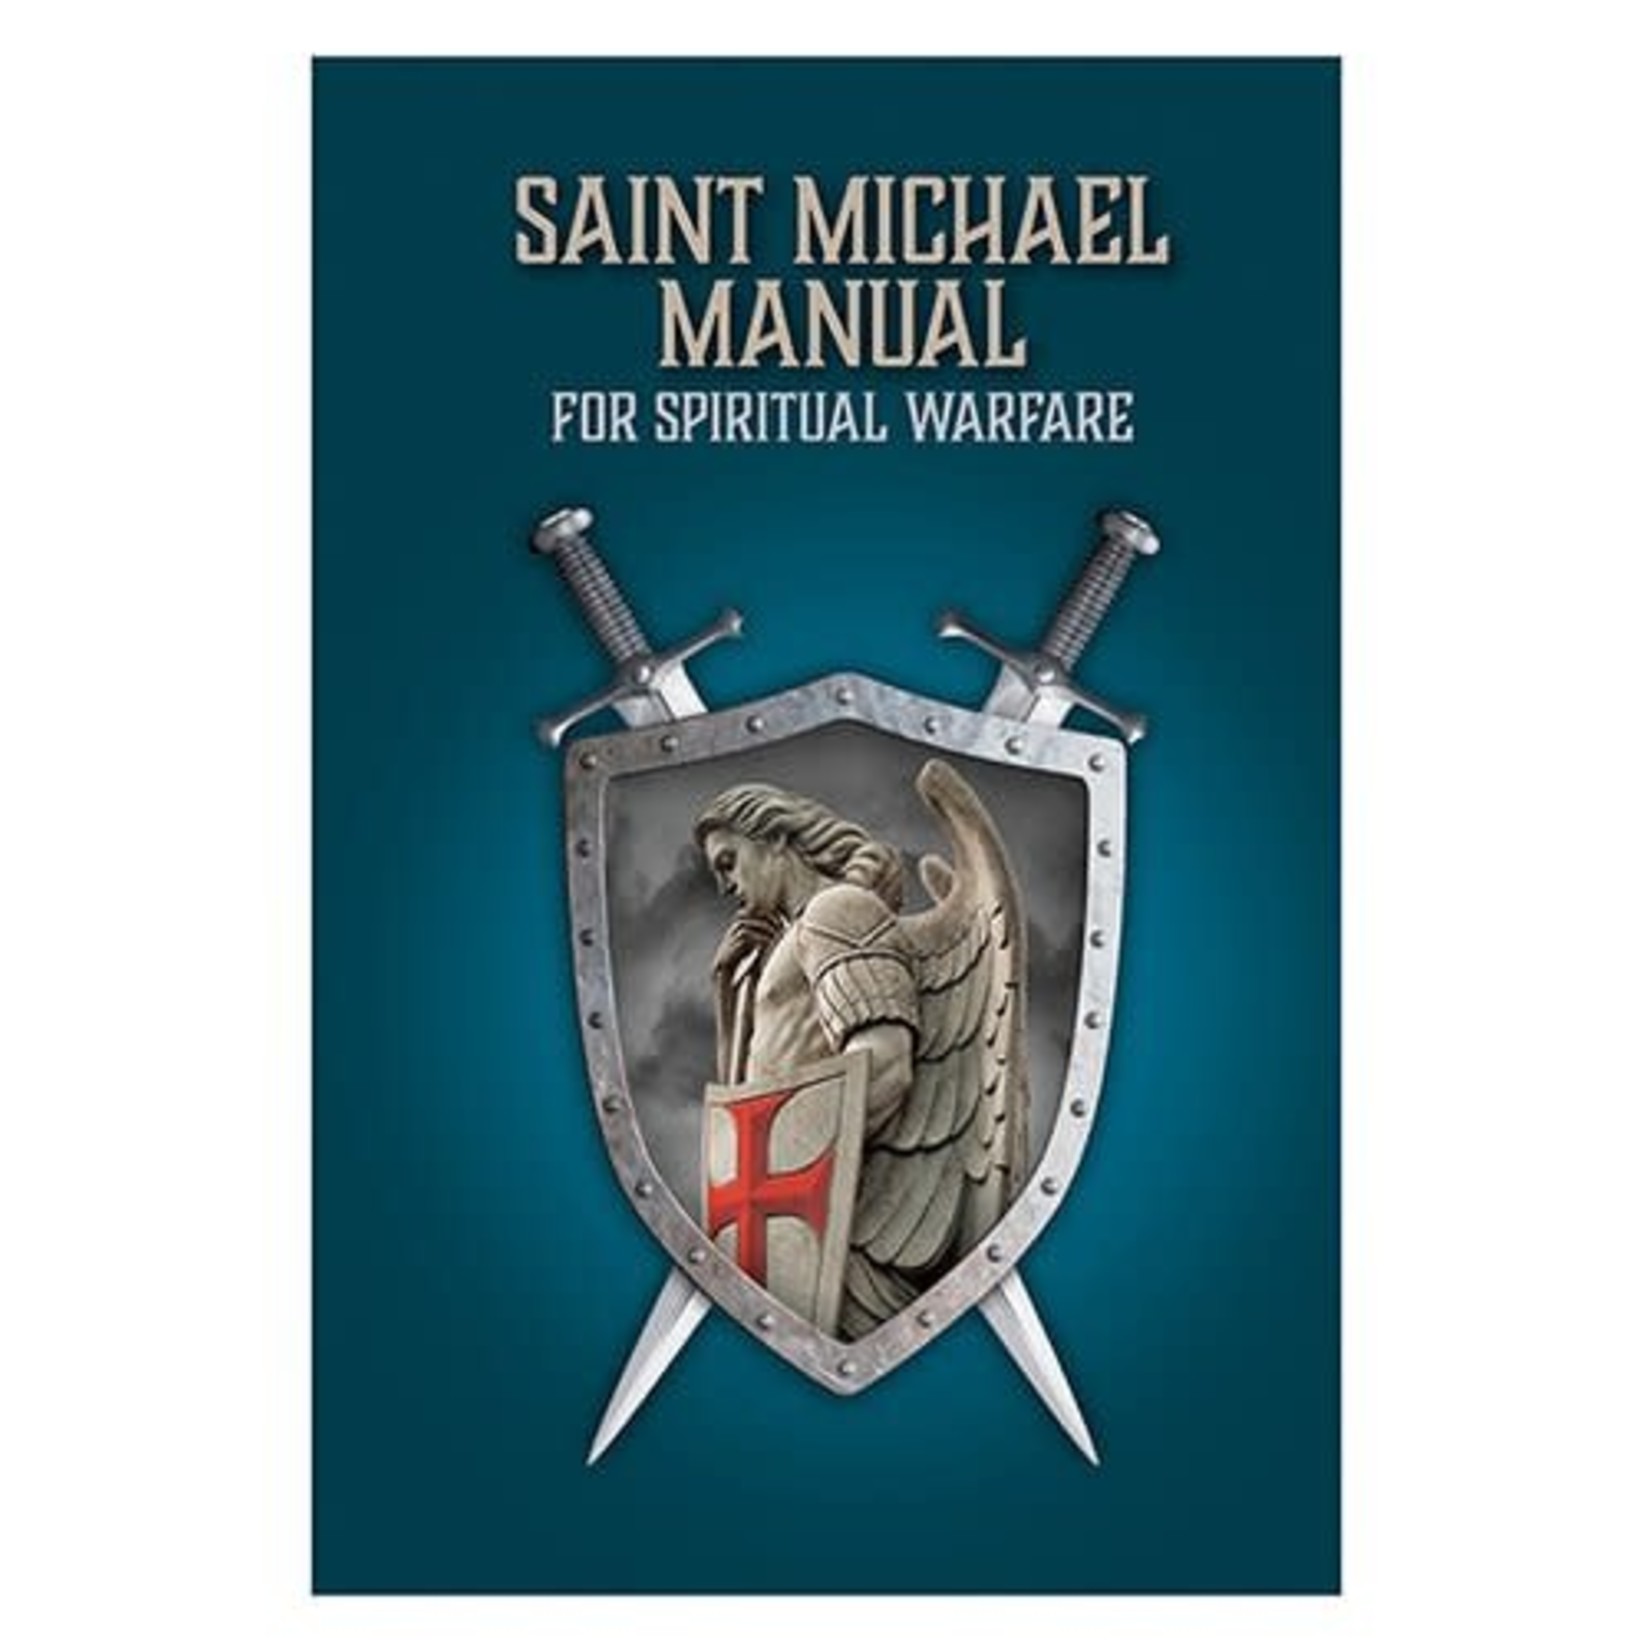 St Michael Manual for Spiritual Warfare